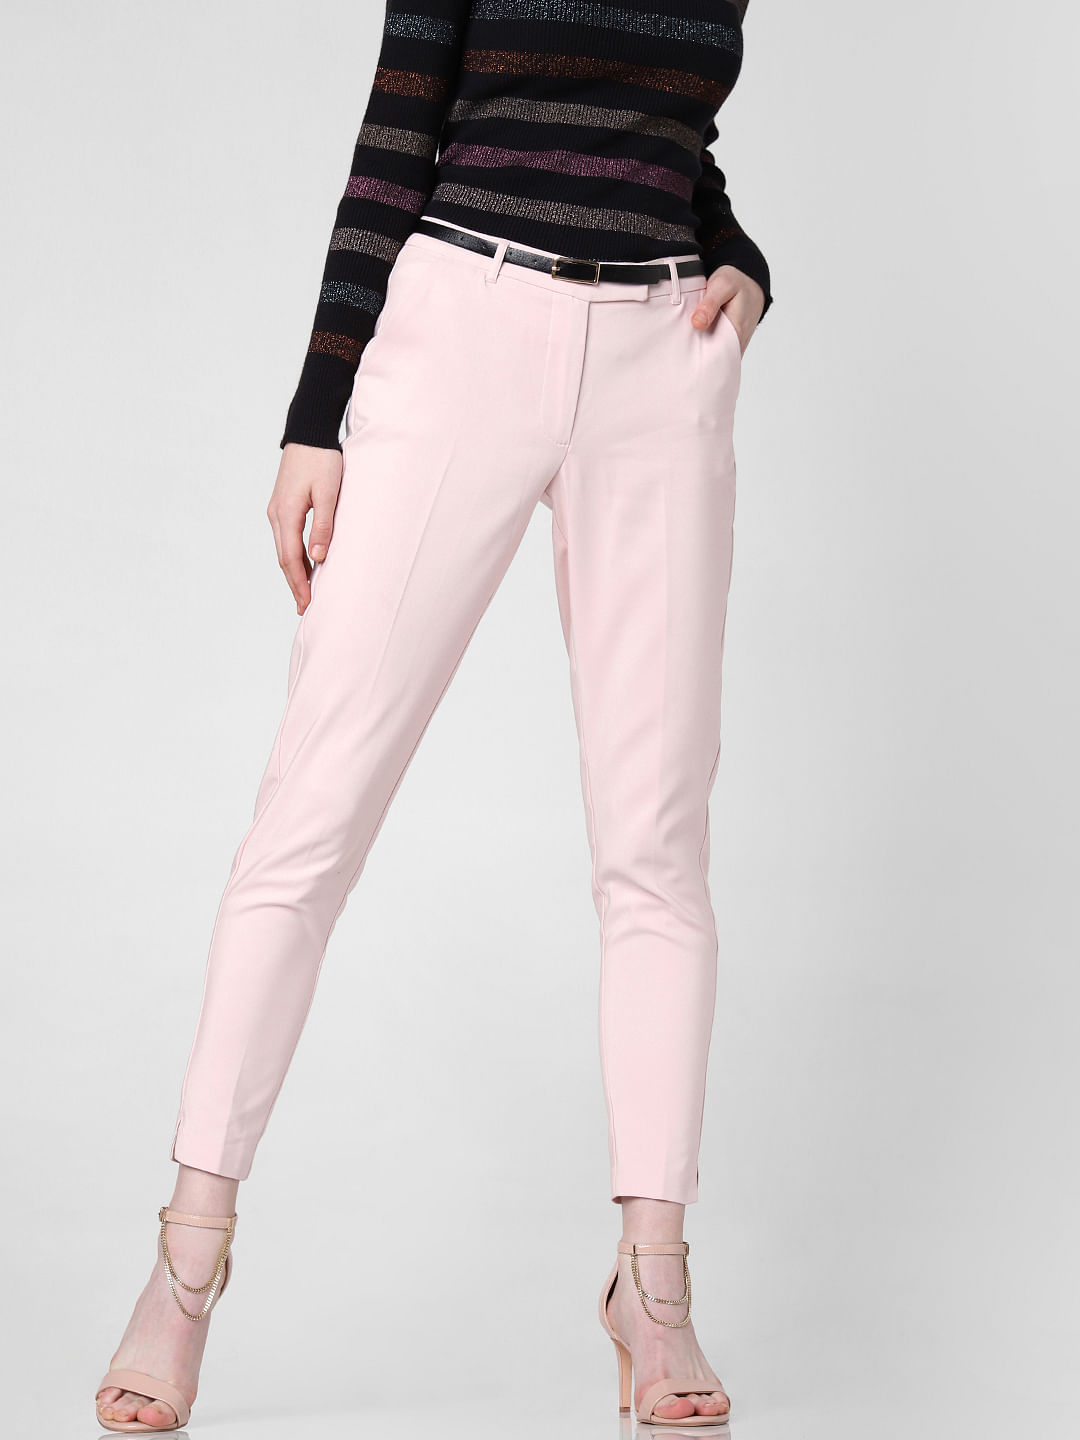 Women Premium Cotton Baby Pink TrousersPants